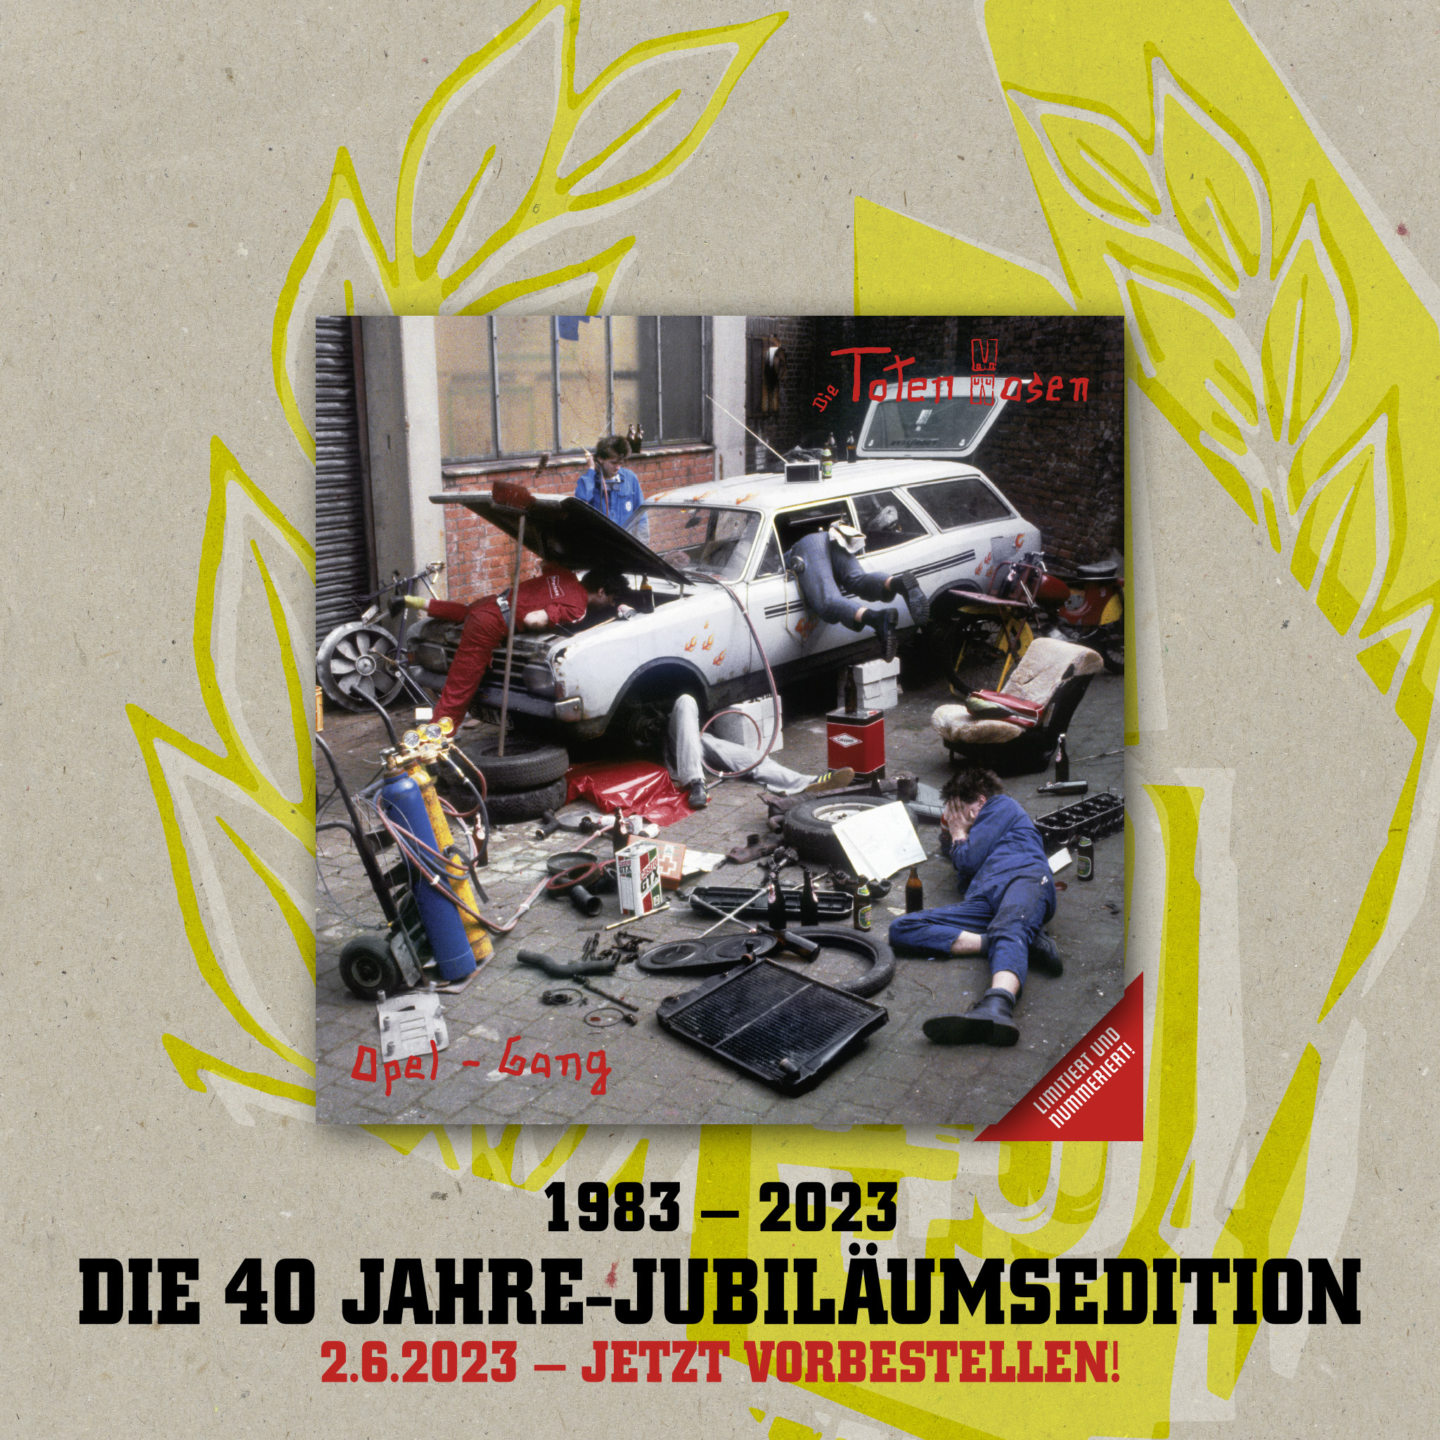 "Opel-Gang 1983-2023: Die 40 Jahre-Jubiläumsedition"